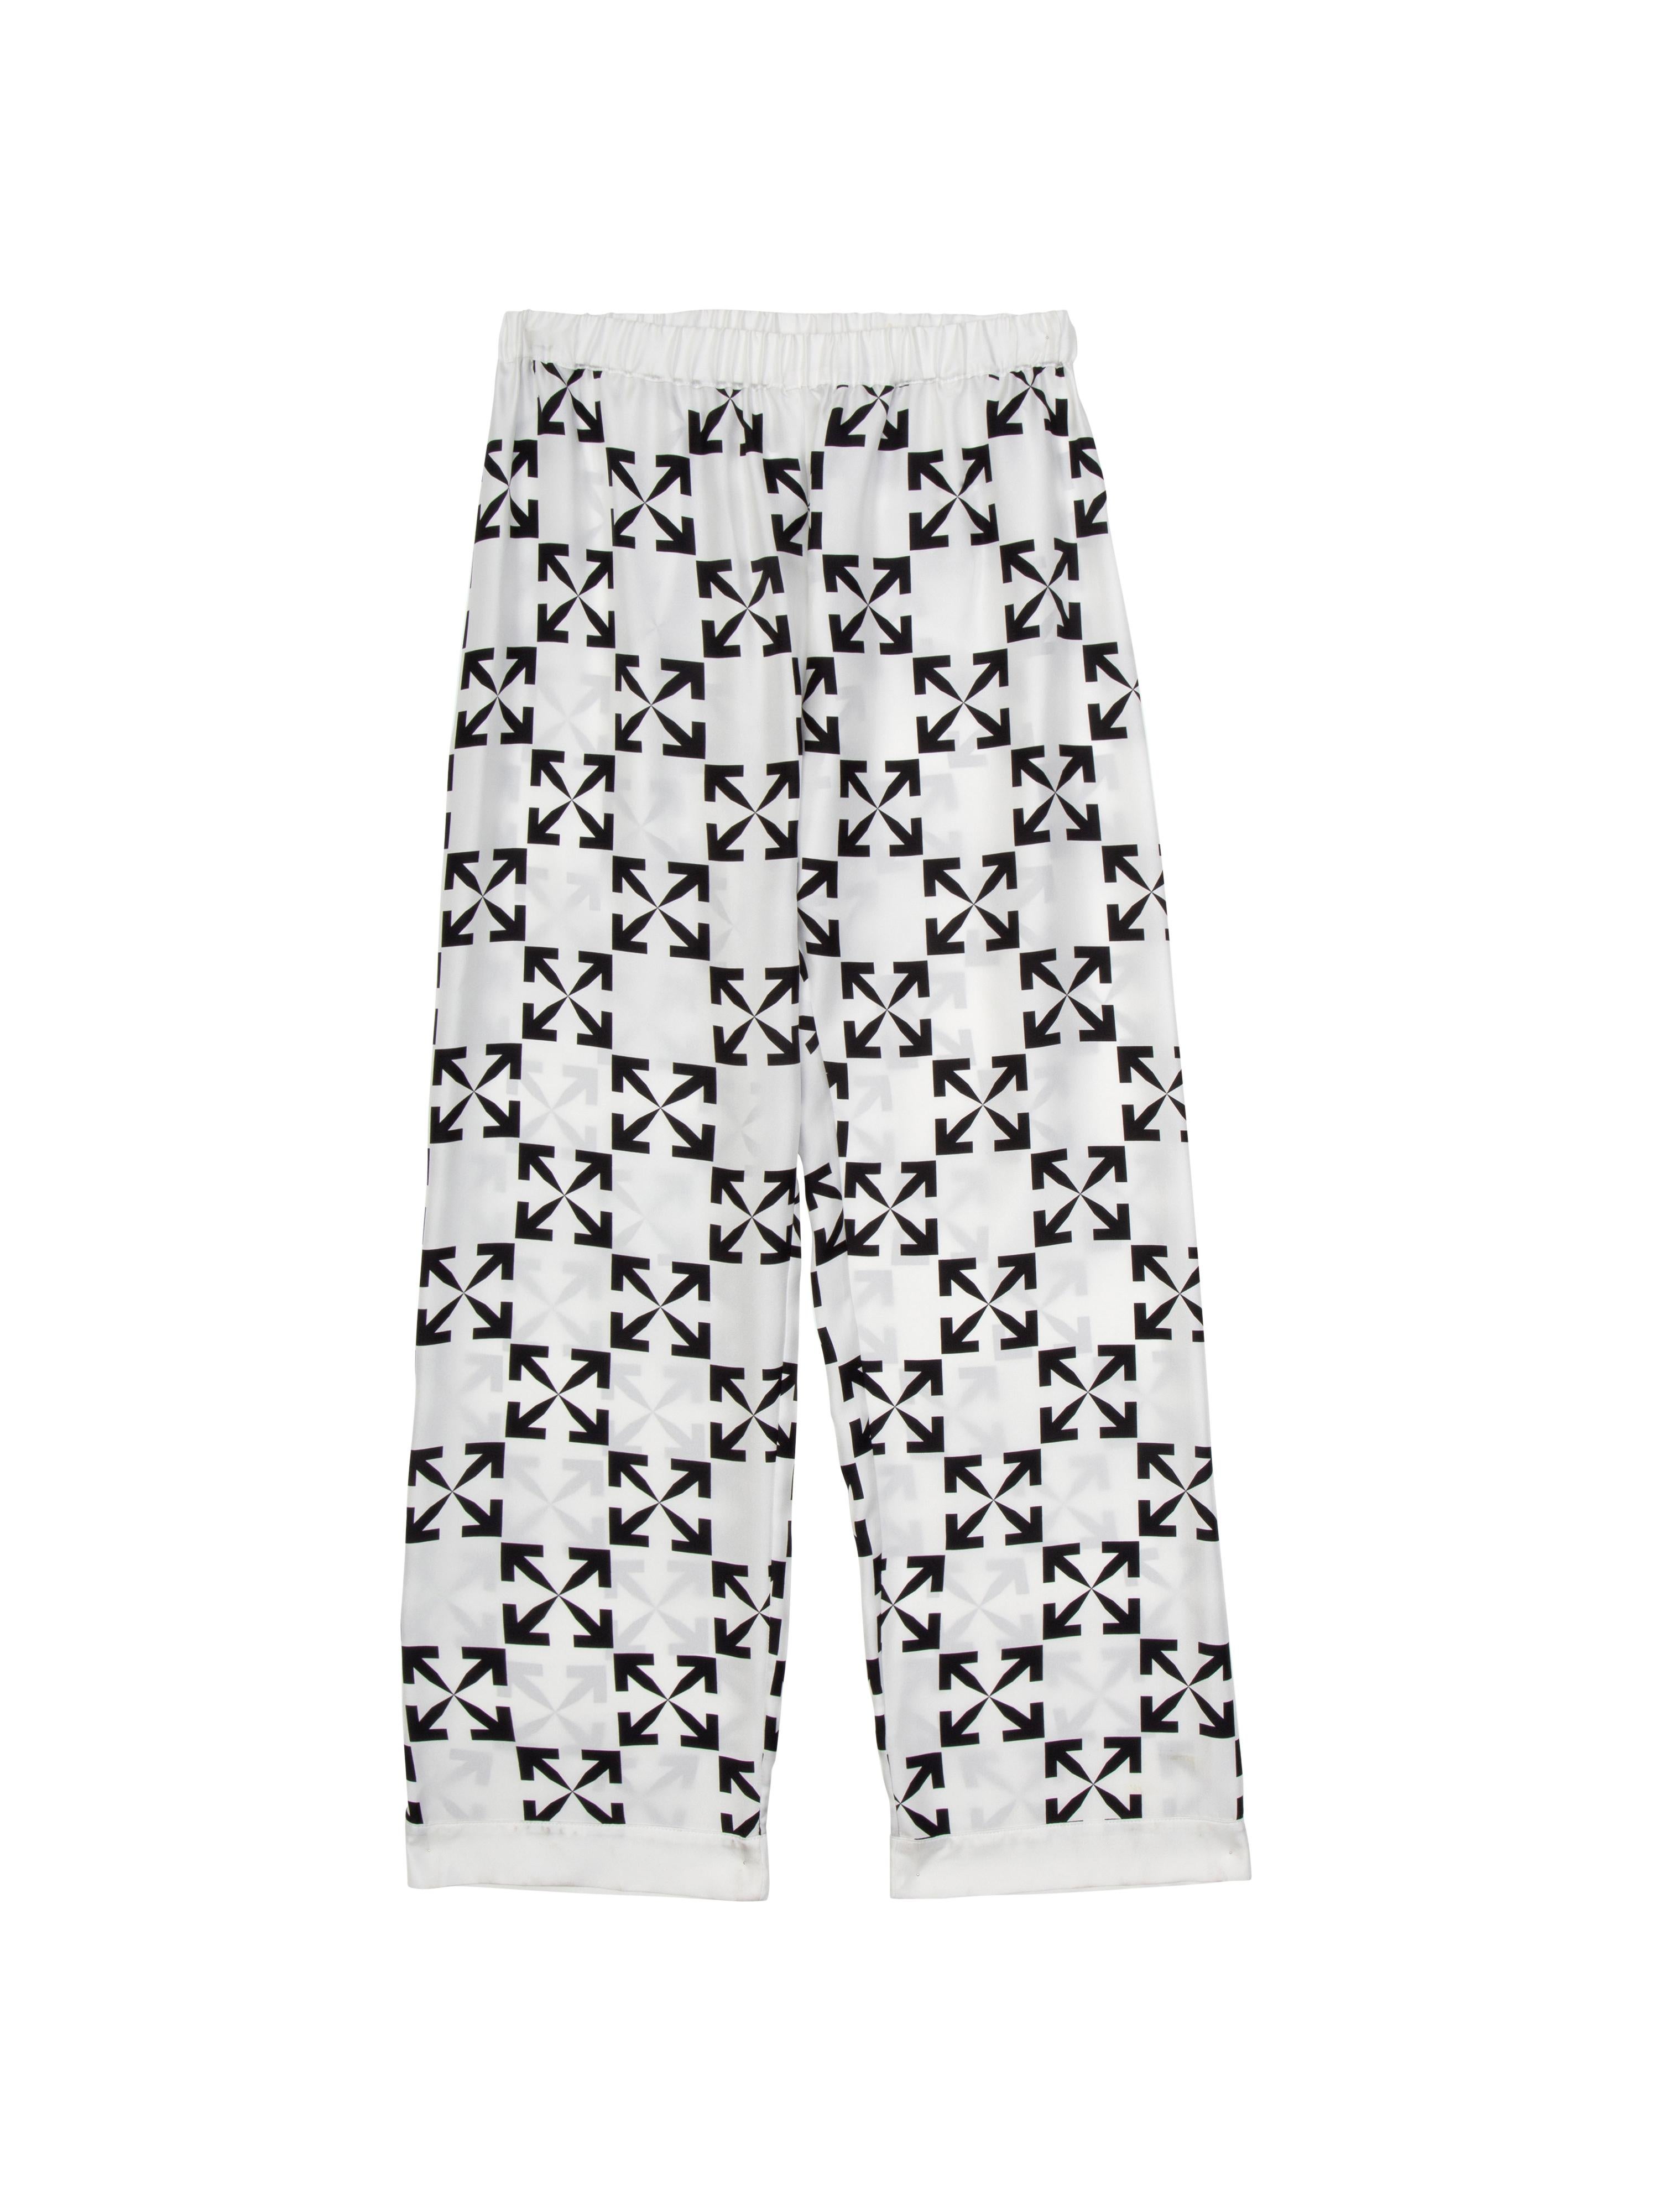 Italian Off-White Arrow Pattern Pijama White Black Small For Sale